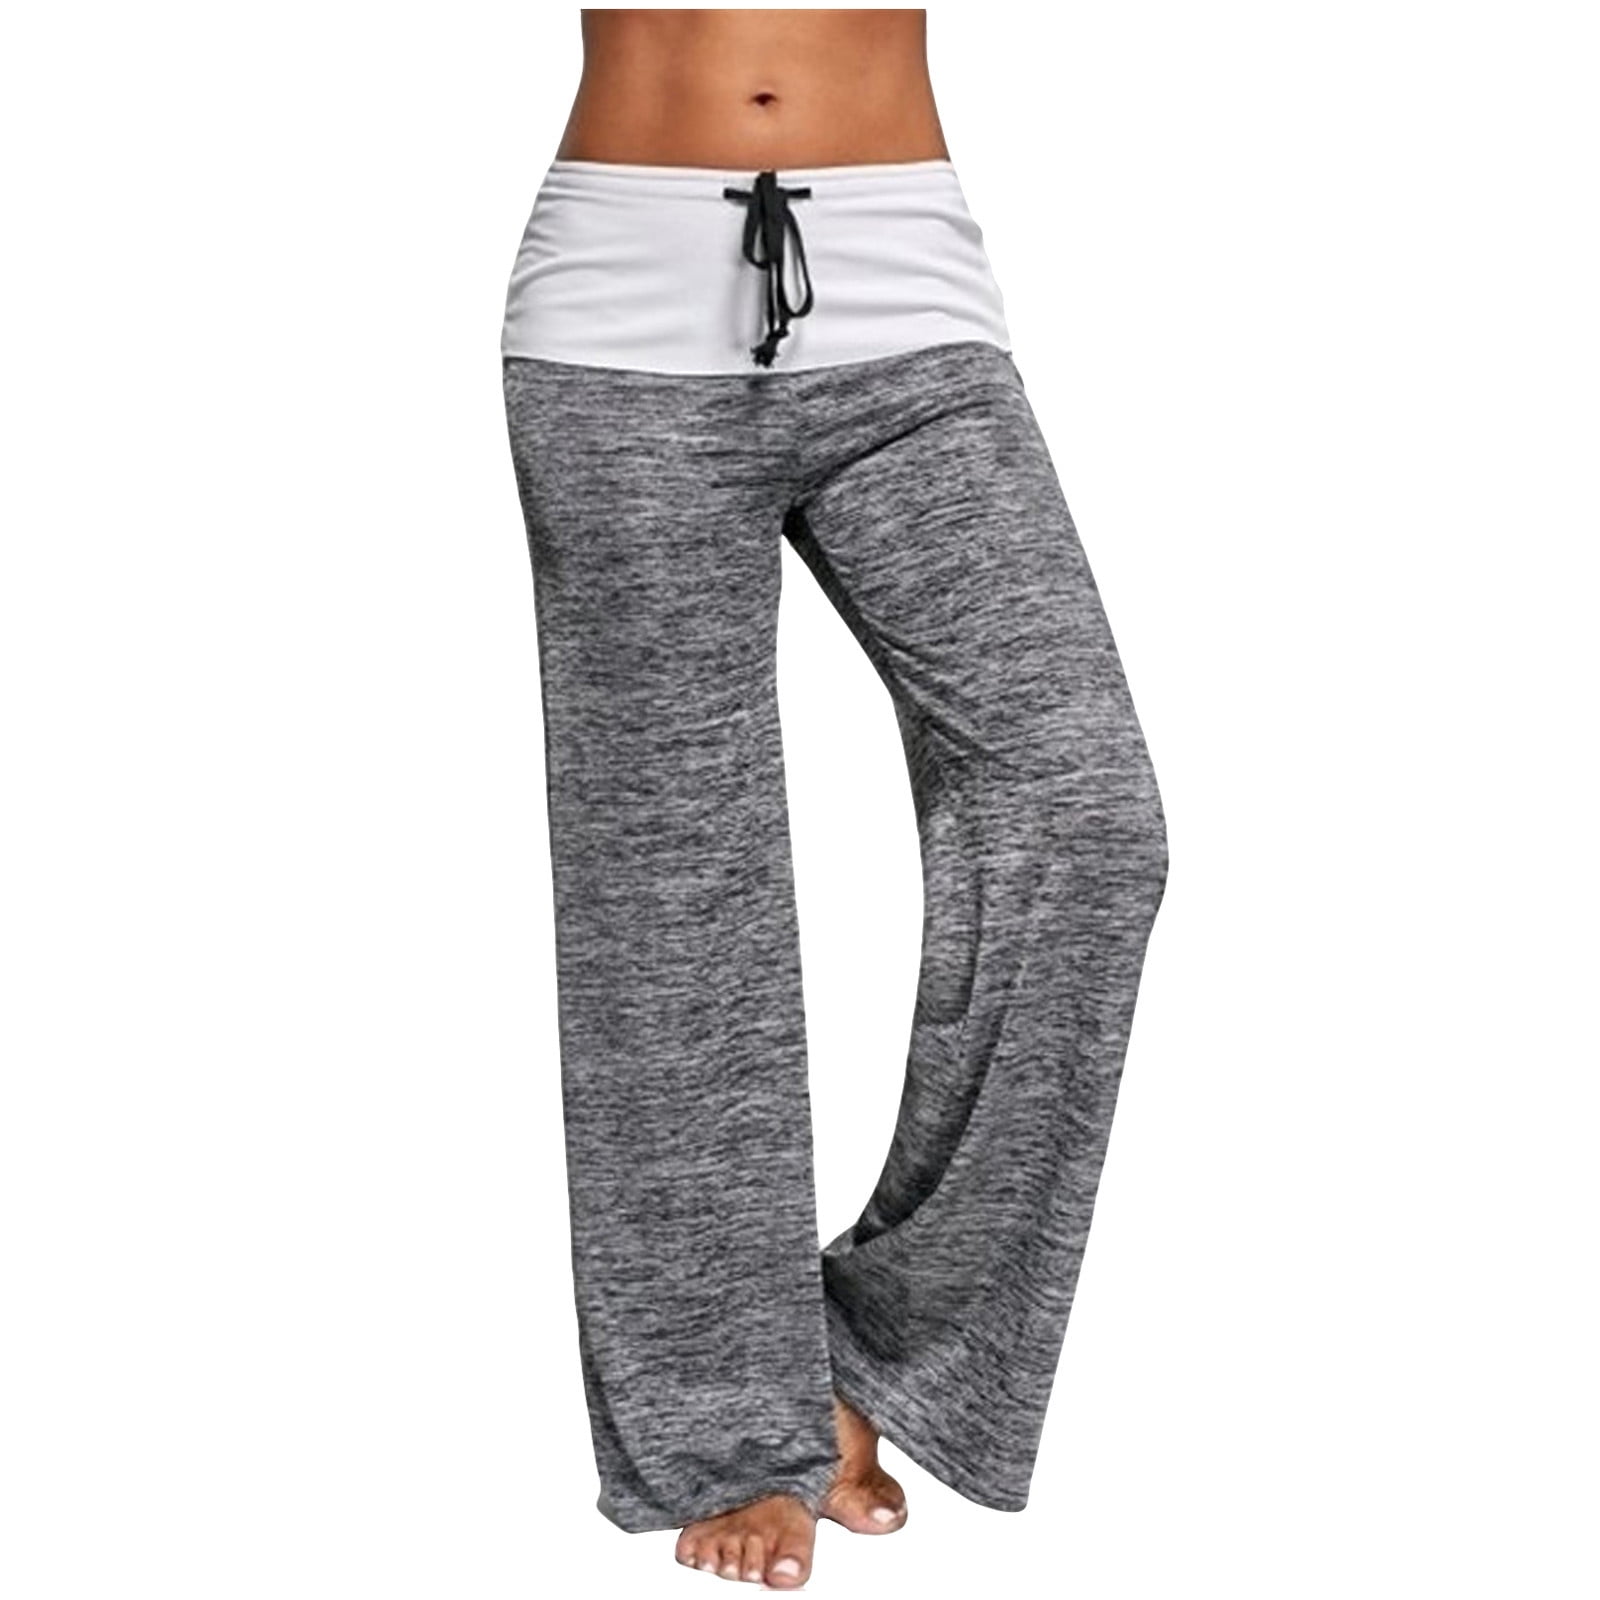 Baocc Yoga Pants Pants Running Color High-Waist Casual Solid Slim-Fitting  Fitness Tights Leggings Pocket Women's -Lifting Yoga Yoga Pants Pants for  Women Dark Gray 